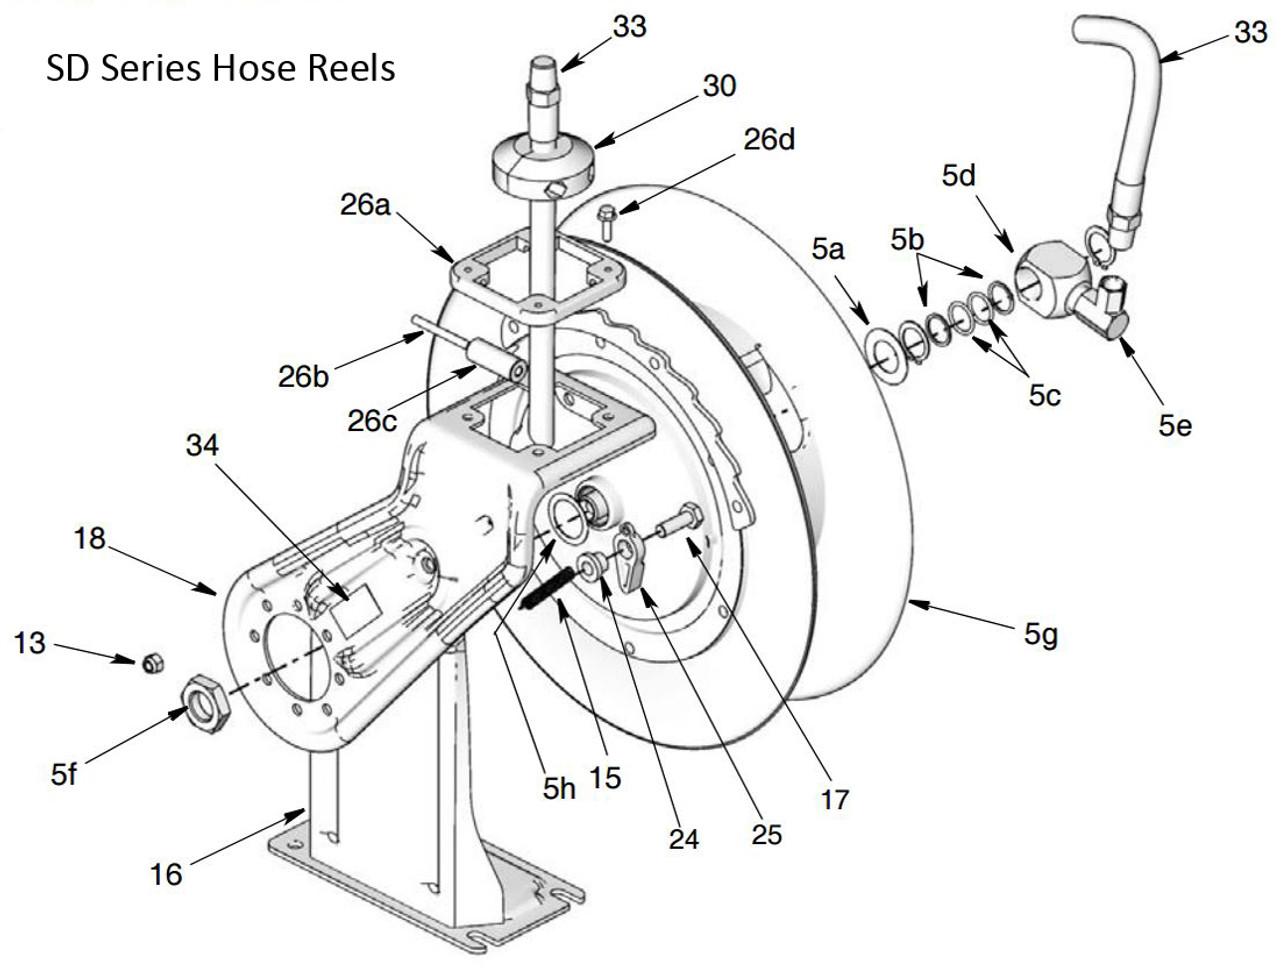 Graco SD Series Air/Water Hose Reel Spool Repair Kits For HPL25B & HPL25D -  John M. Ellsworth Co. Inc.